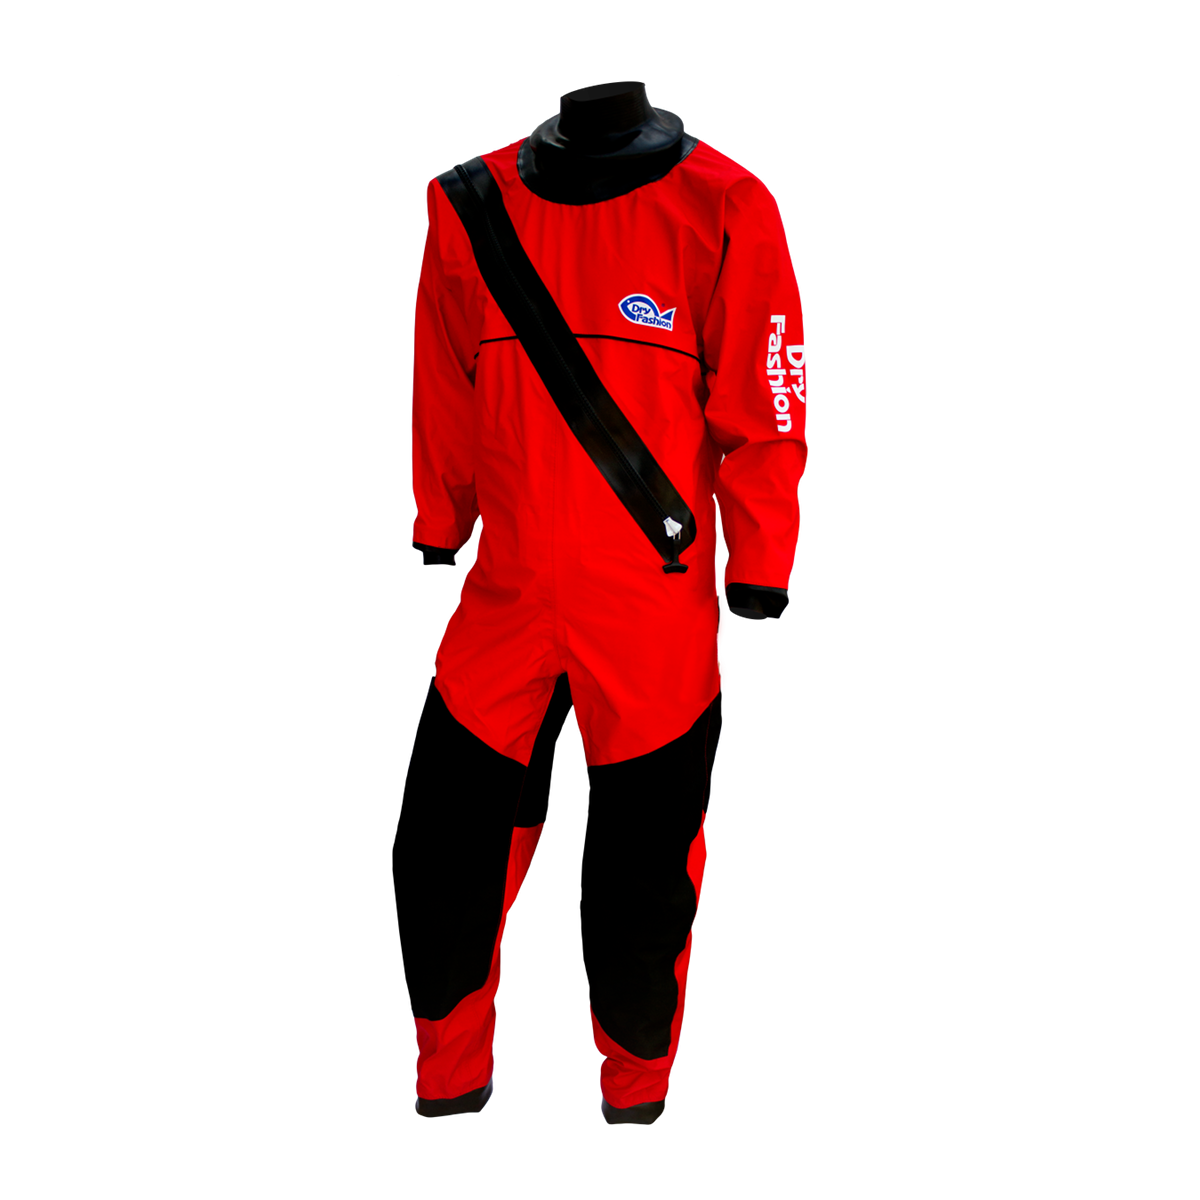 Dry Fashion Profi-Sailing Regatta drysuit ademend unisex rood, maat XL